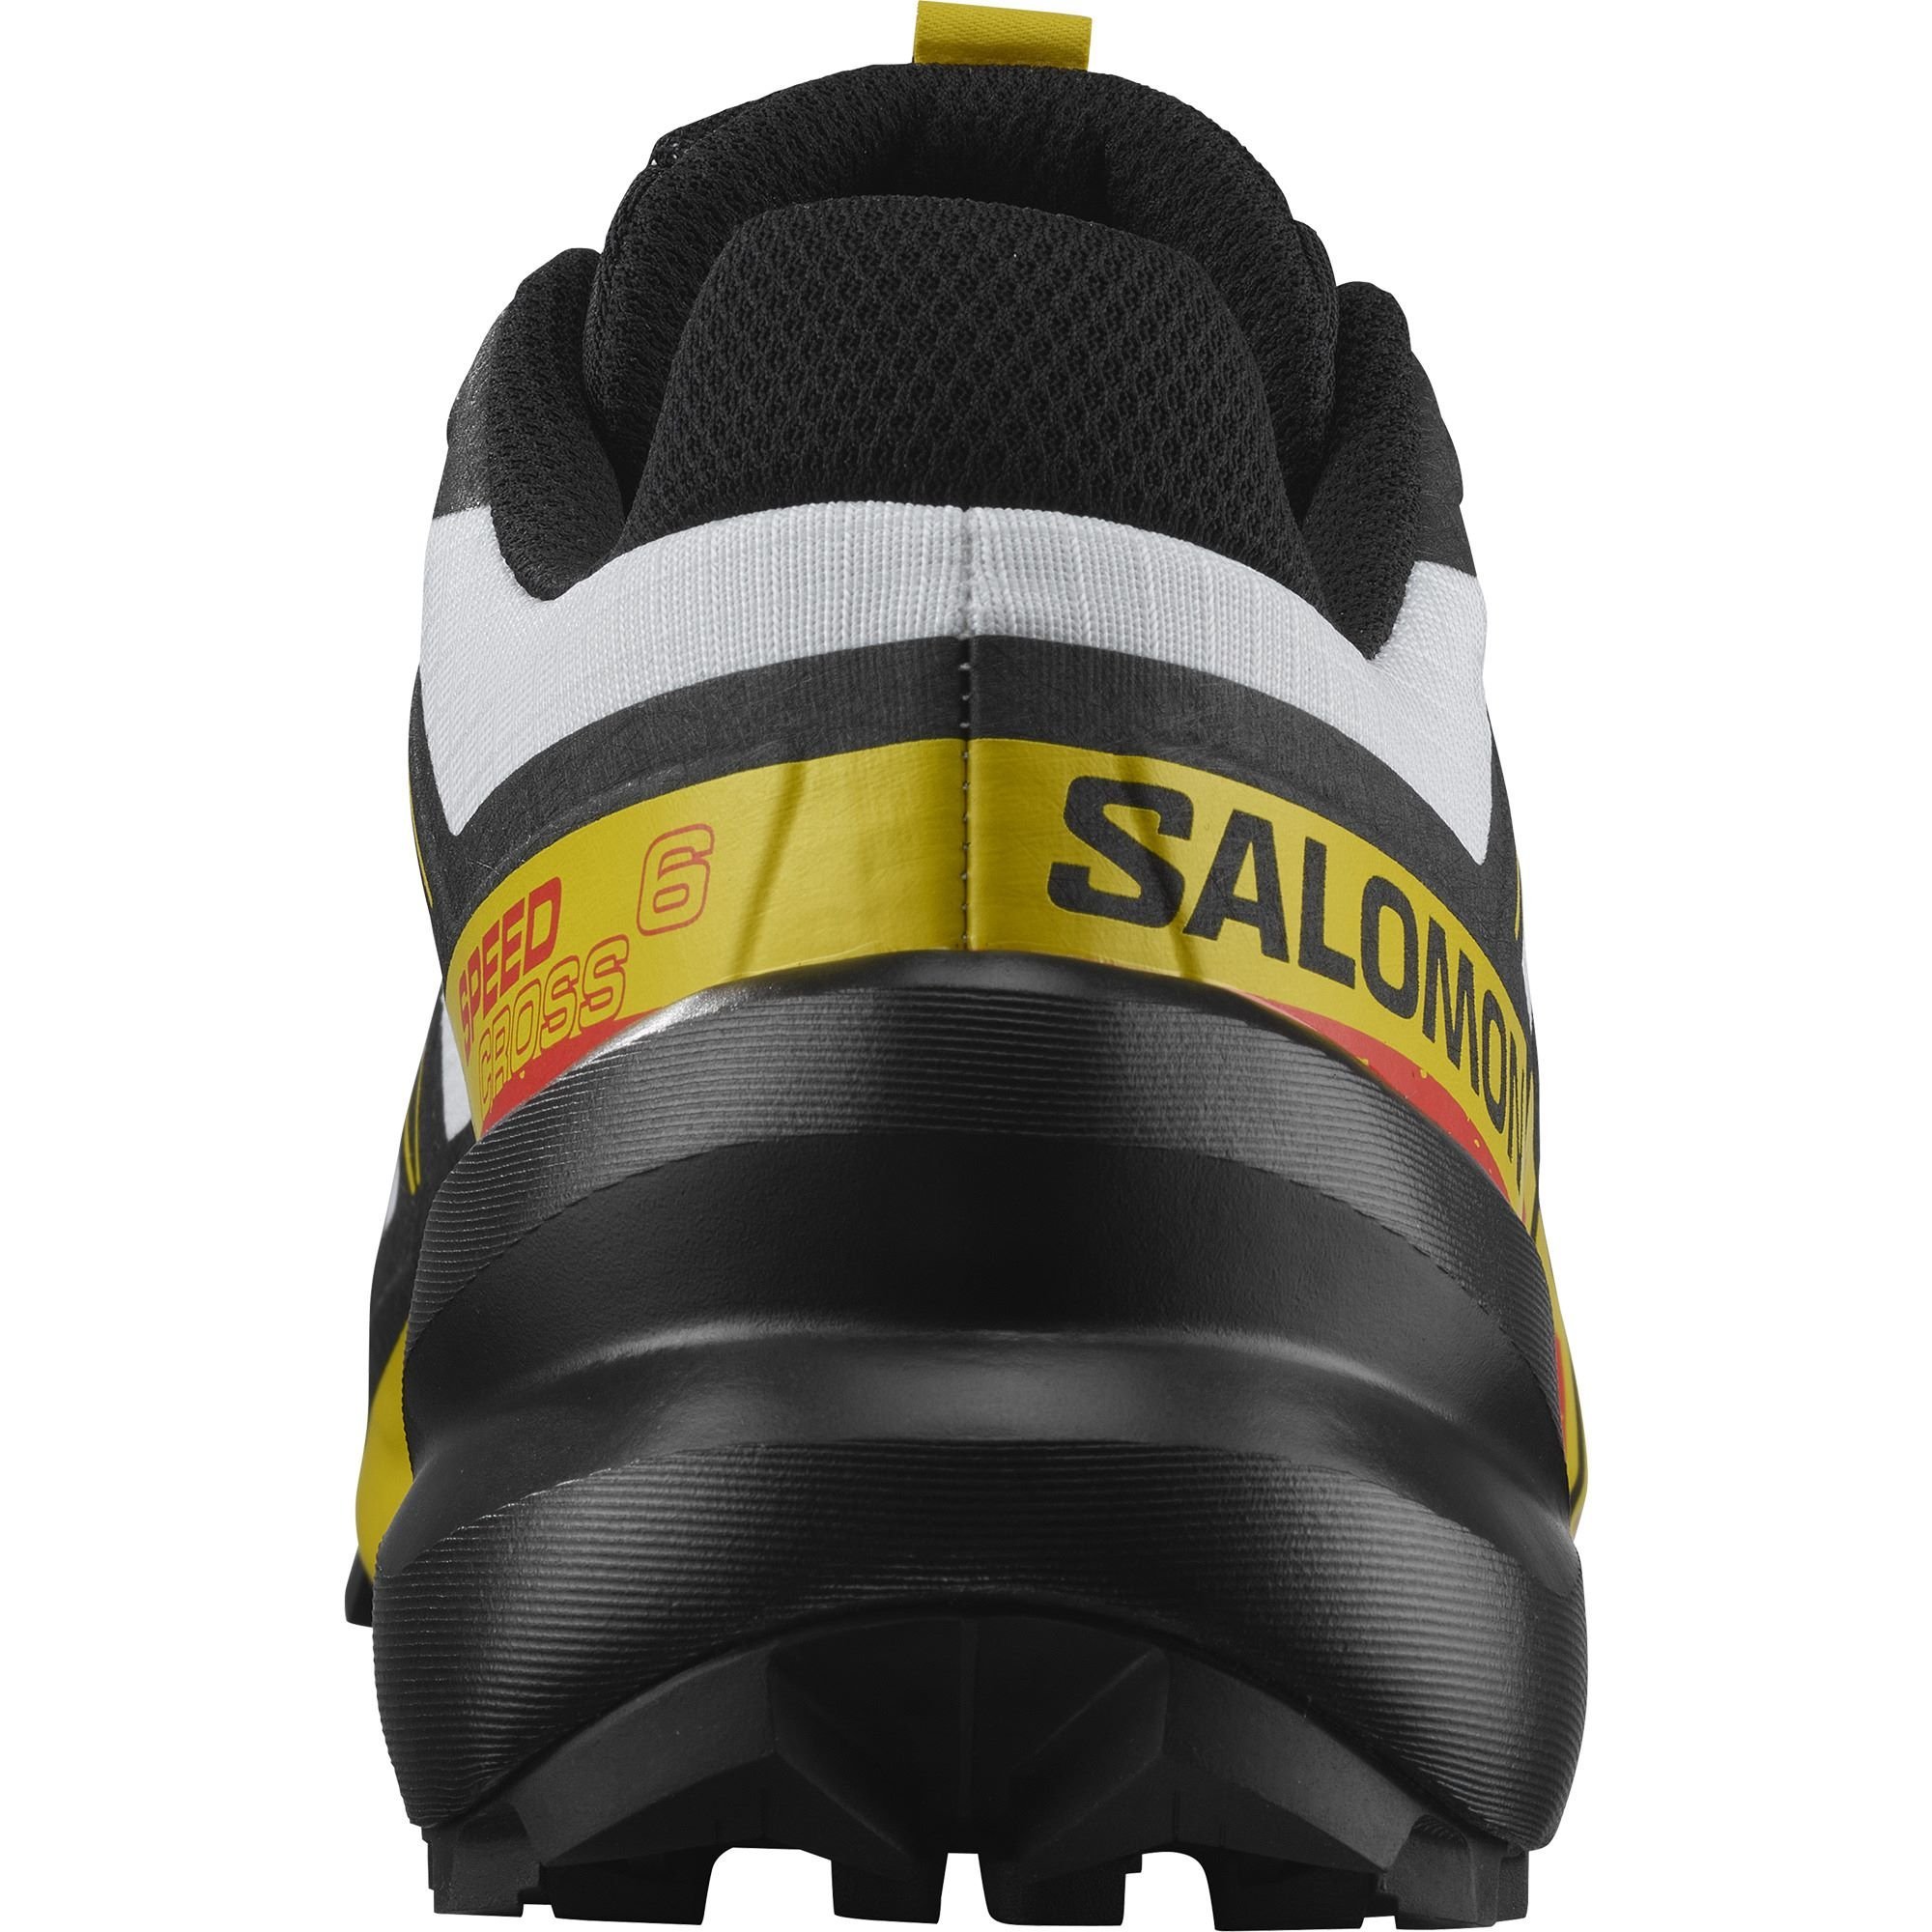 Obuv Salomon Speedcross 6 M - biela/čierna/žltá